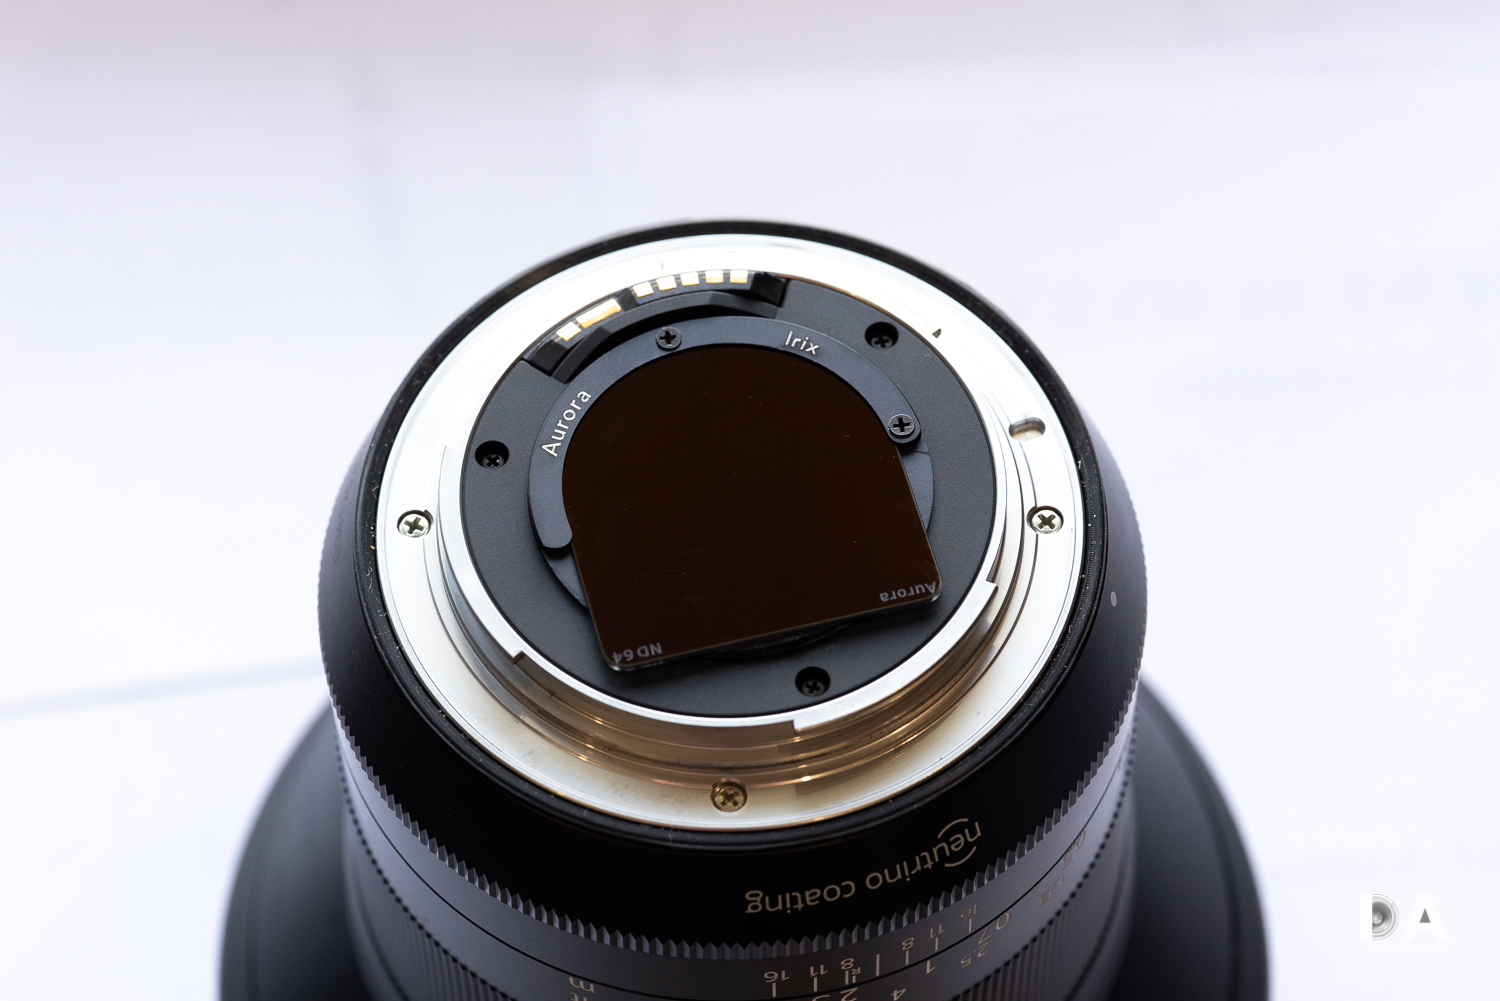 Aurora-aperture Powernd Nd64 86mm Nd 1.8 Filtro 6-stop 